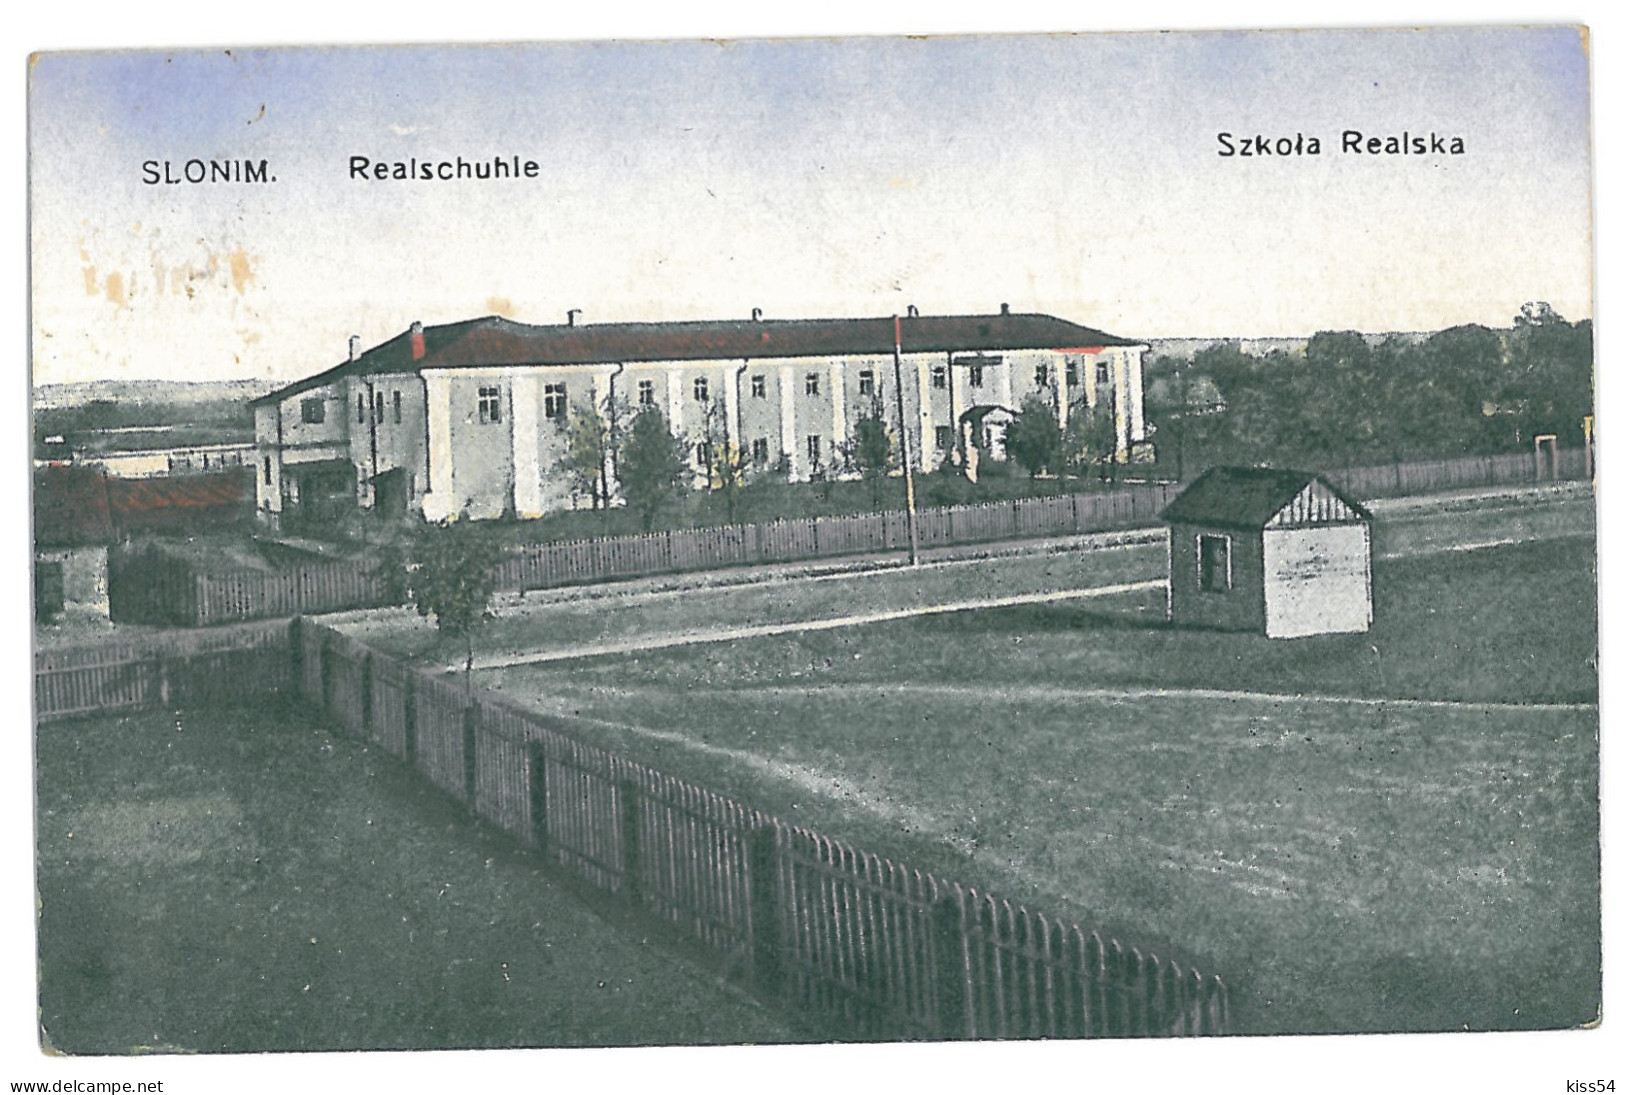 BL 28 - 13815 SLONIM, School, Belarus - Old Postcard, CENSOR - Used - 1916 - Weißrussland